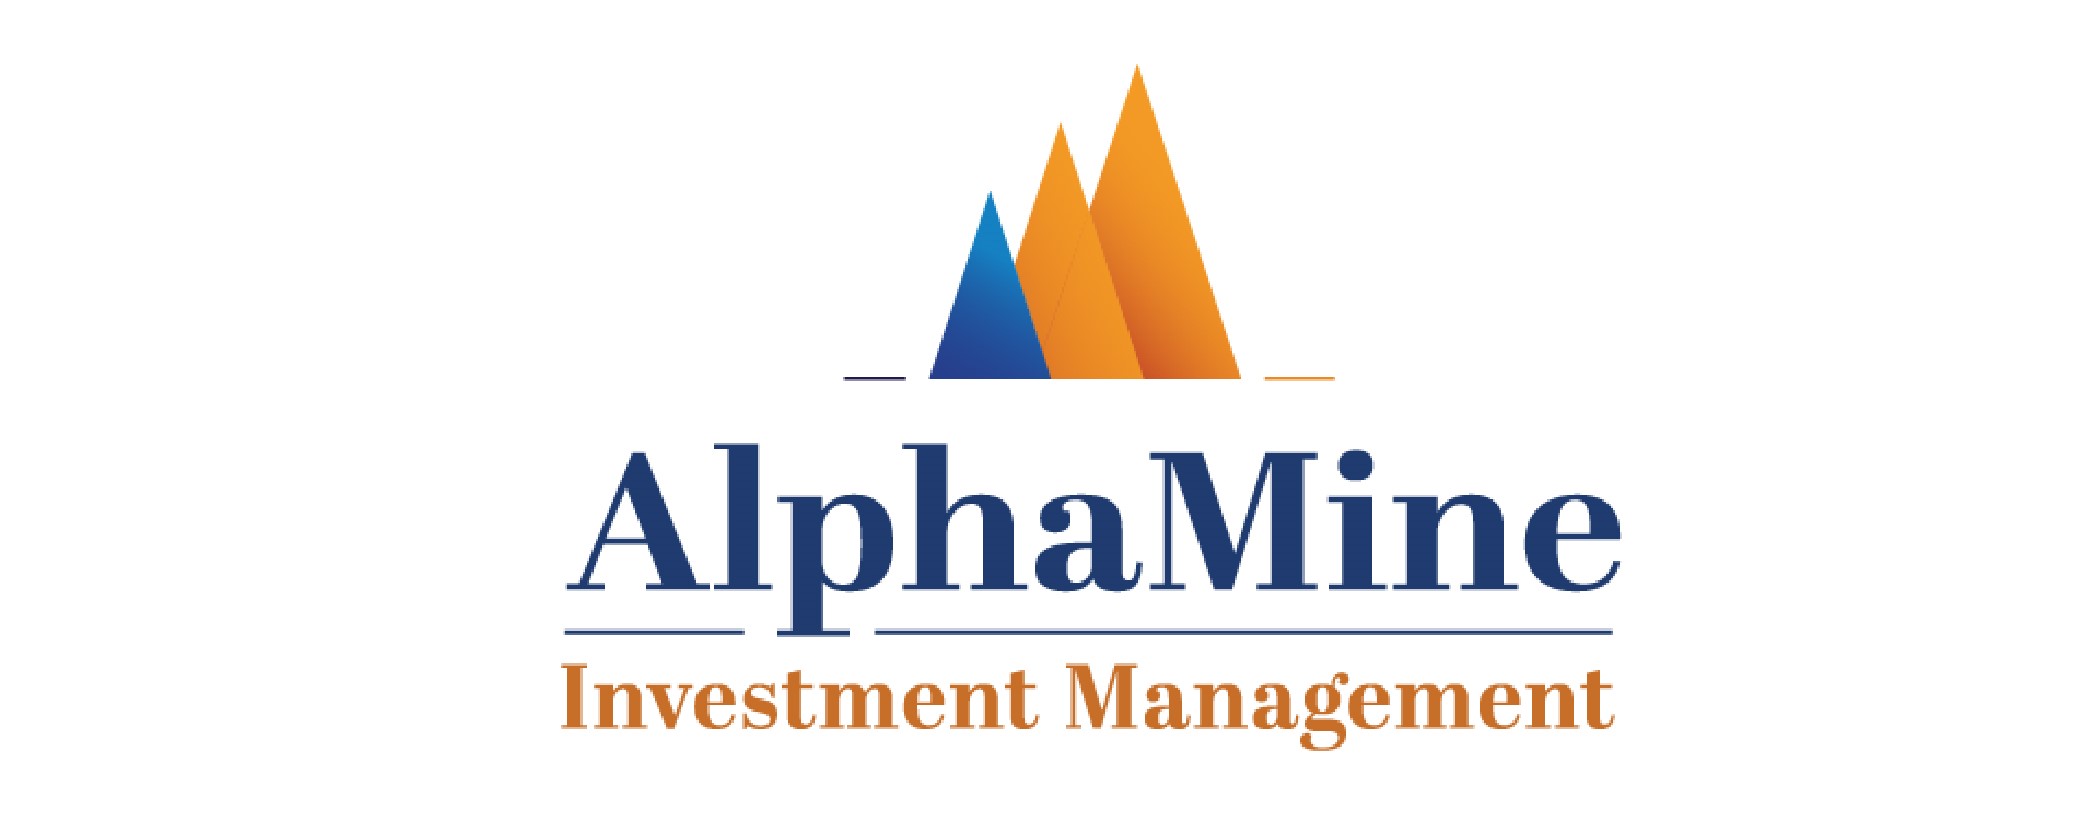 ALPHAMINE INVESTMENT MANAGEMENT PVT. LTD.